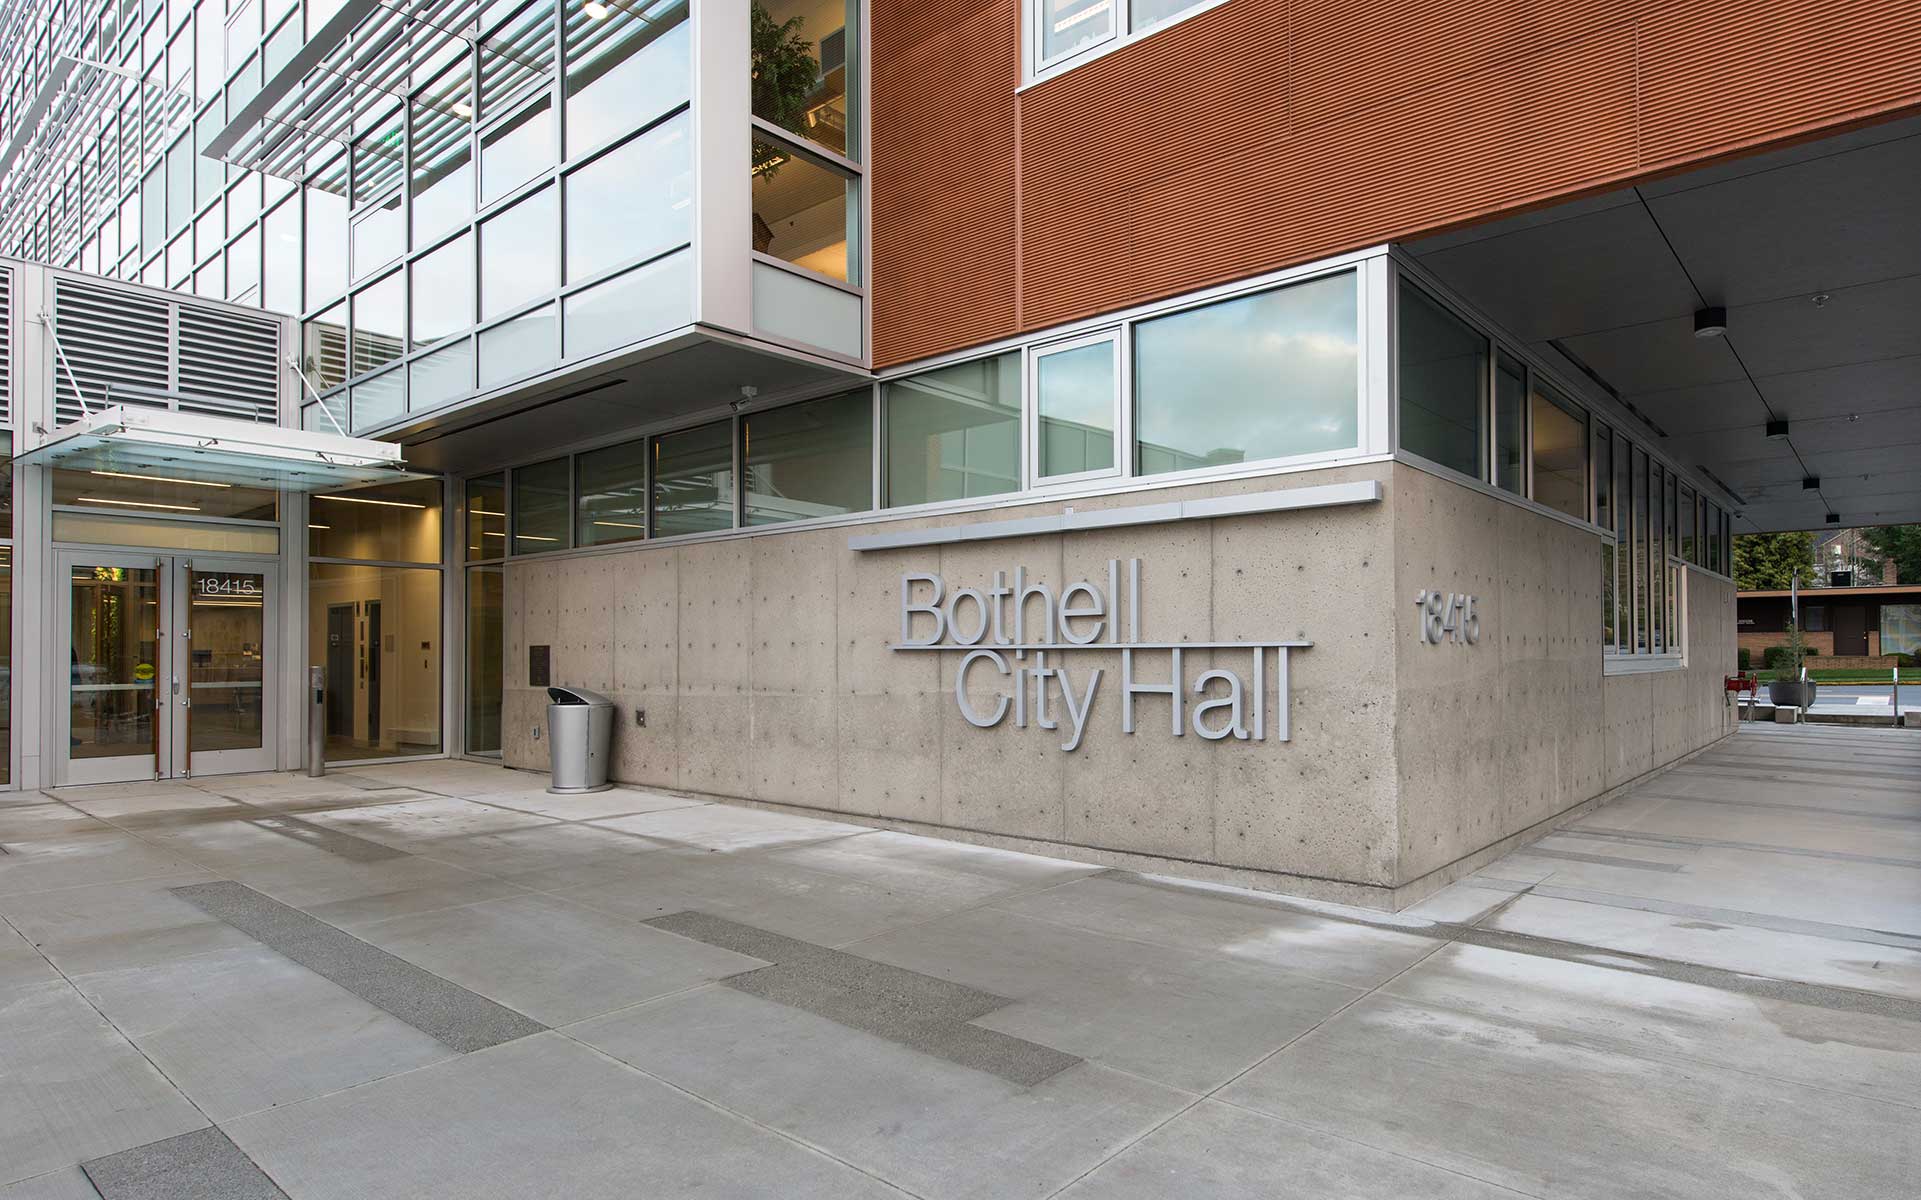 bothell city hall entrance